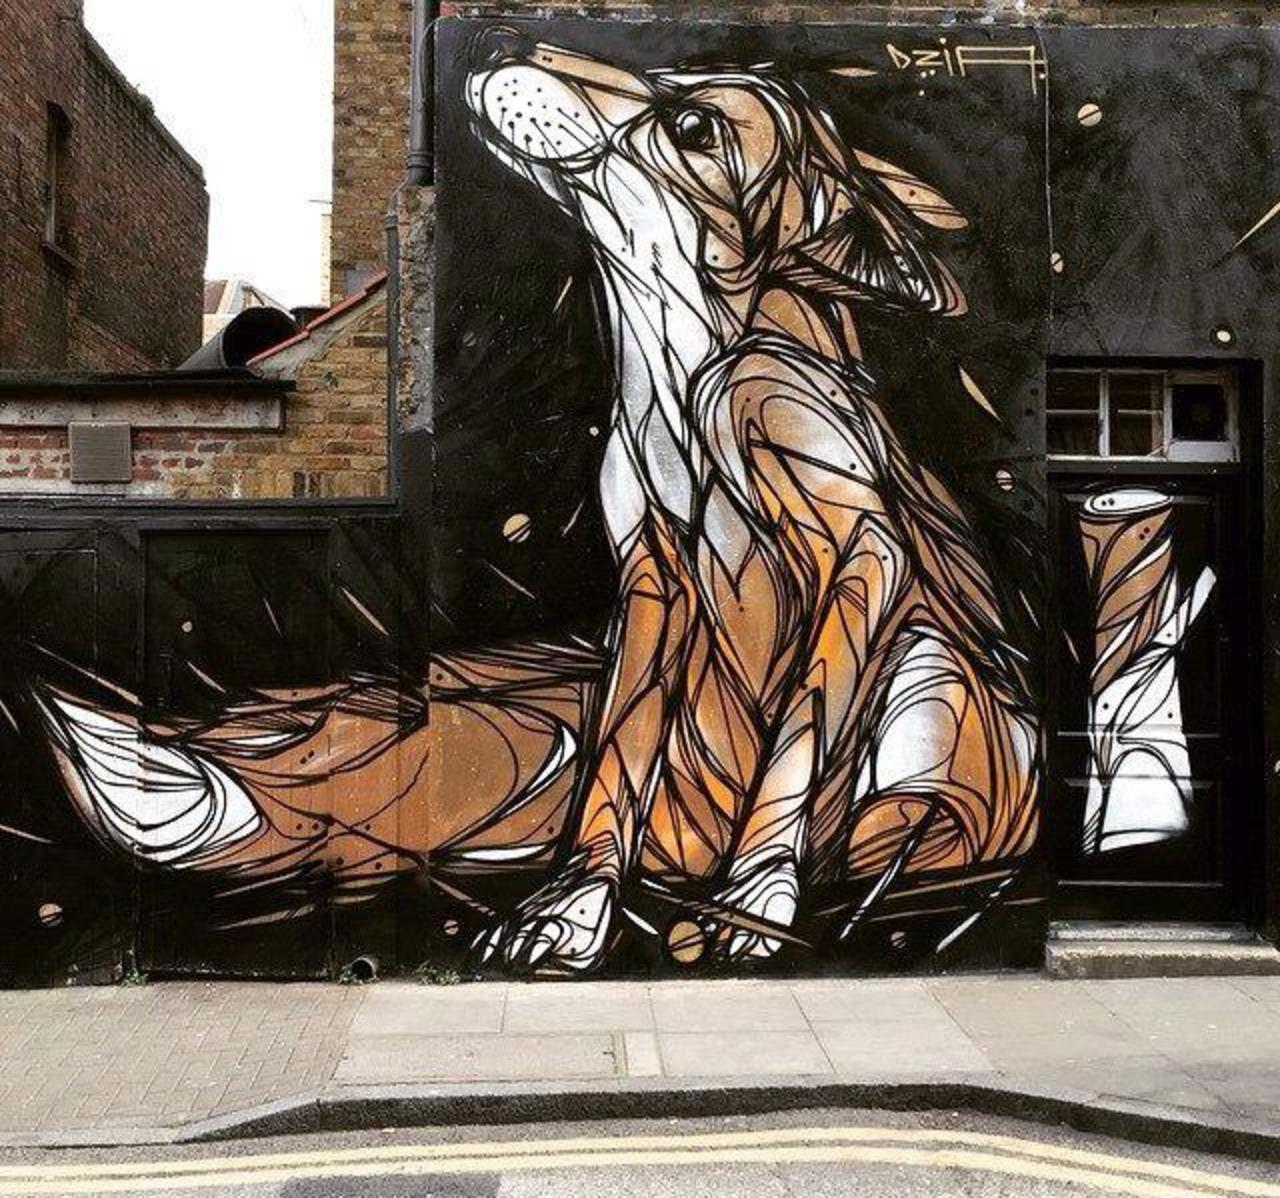 New Street Art by DZIA in London  

#art #arte #graffiti #streetart http://t.co/hLM1oWKV3X